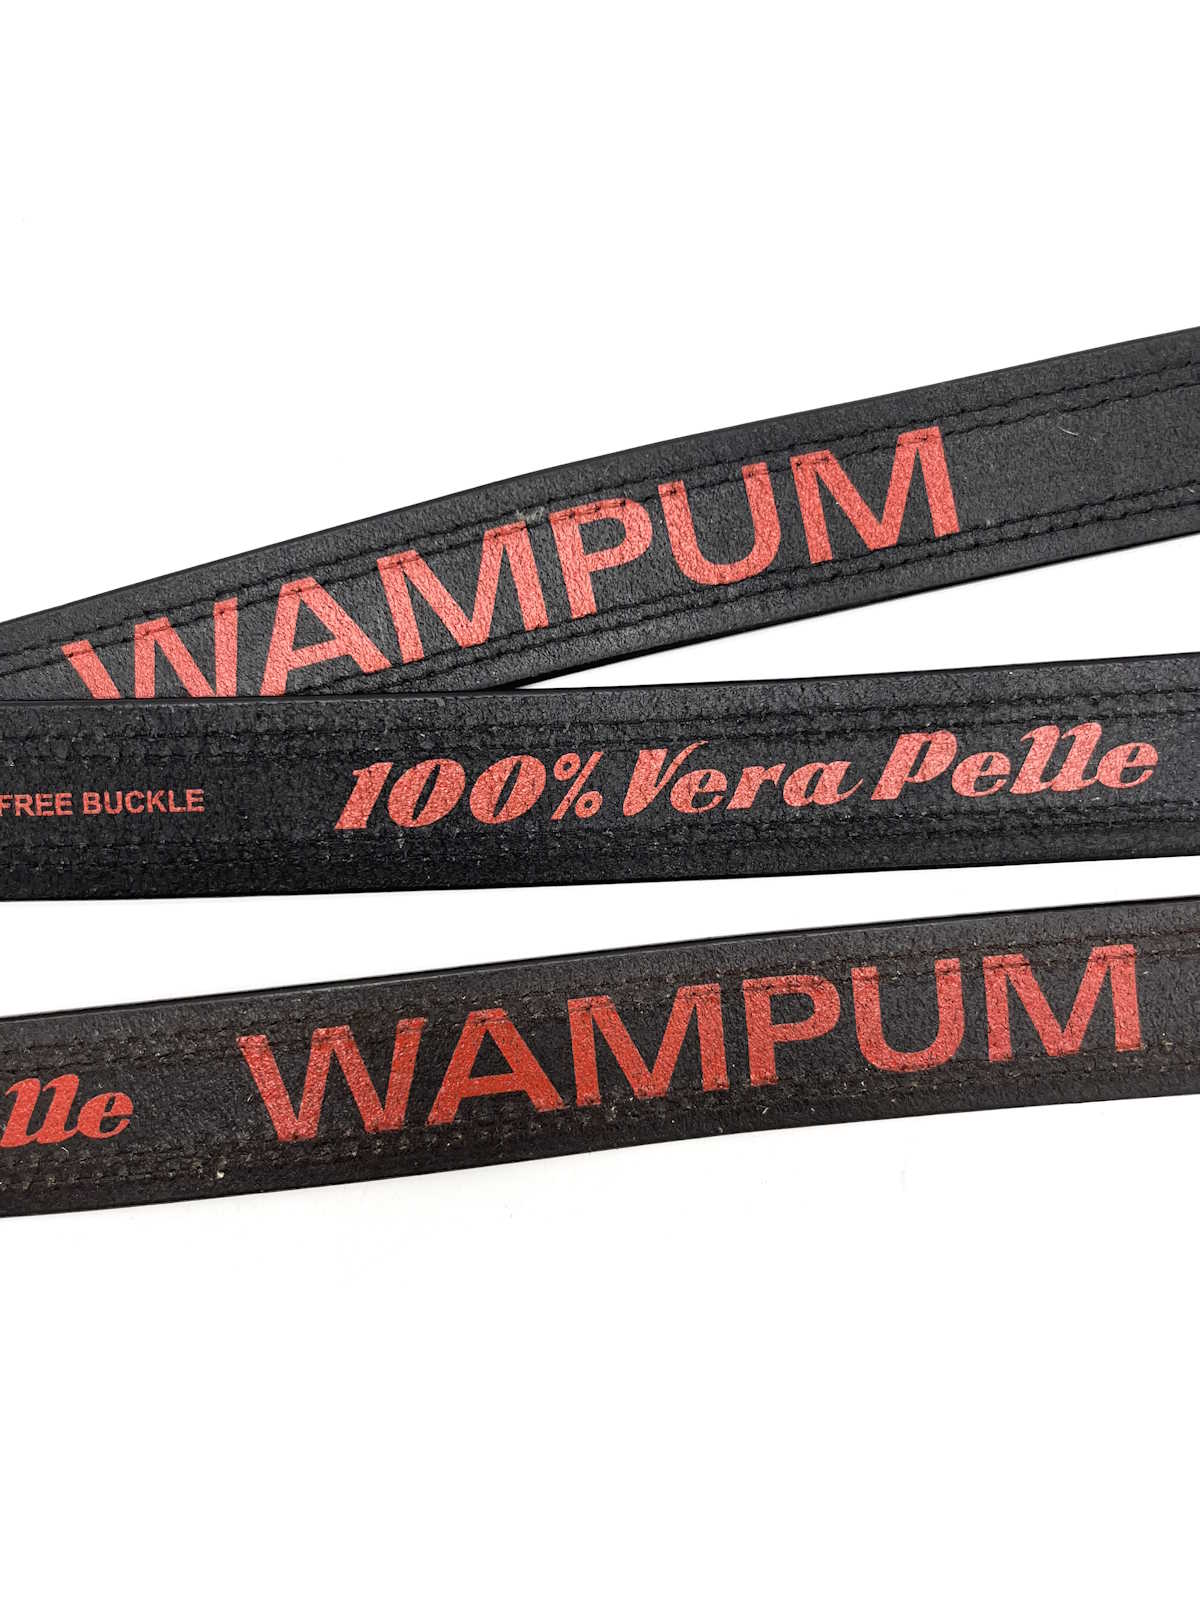 Cintura in vera pelle, marca Wampum, art. IDK506/35